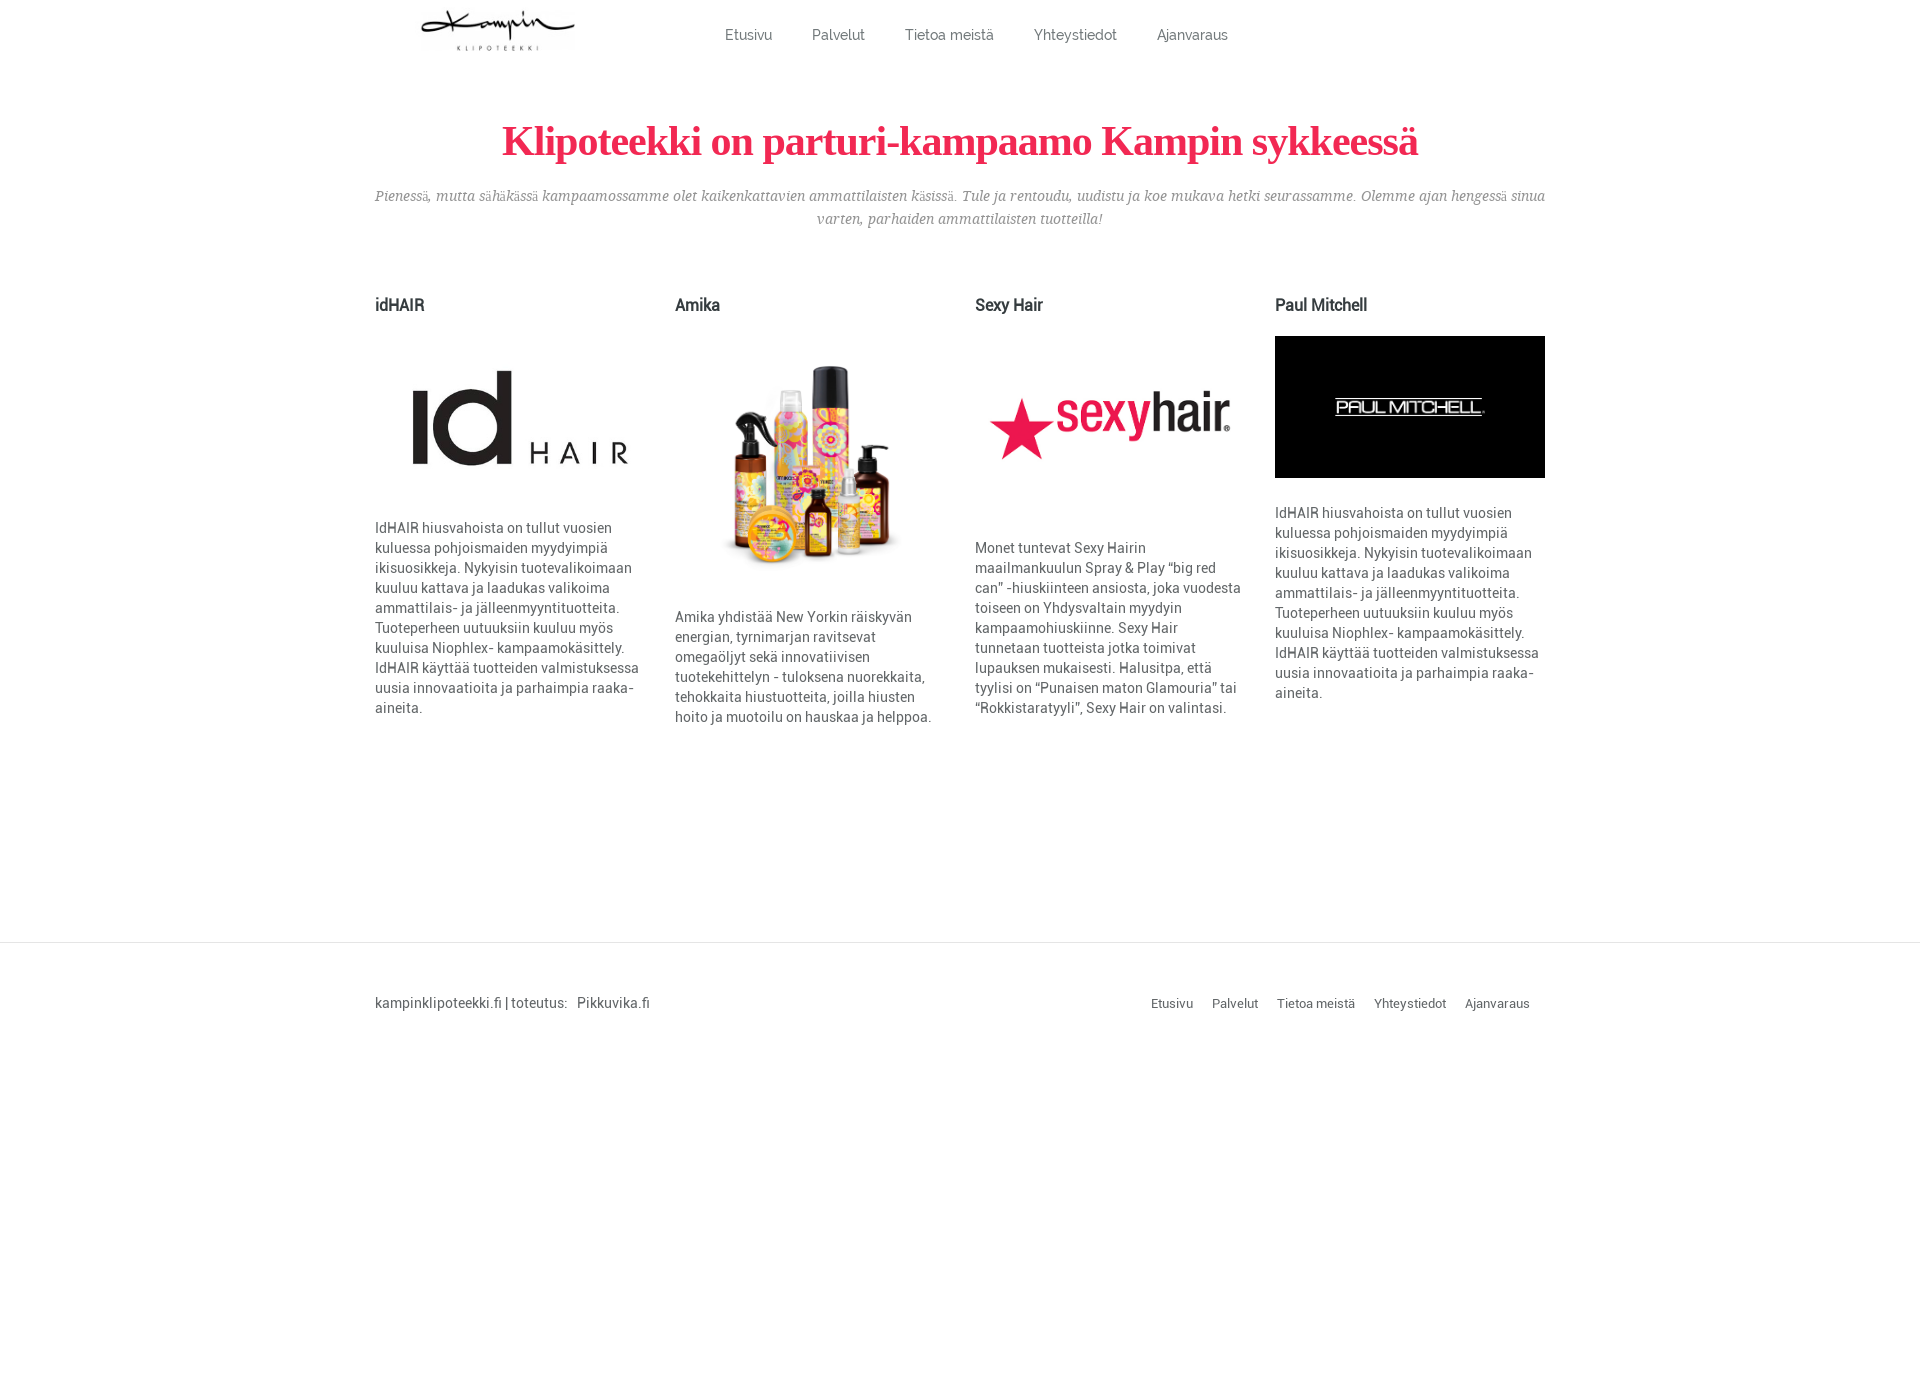 Skärmdump för kampinklipoteekki.fi